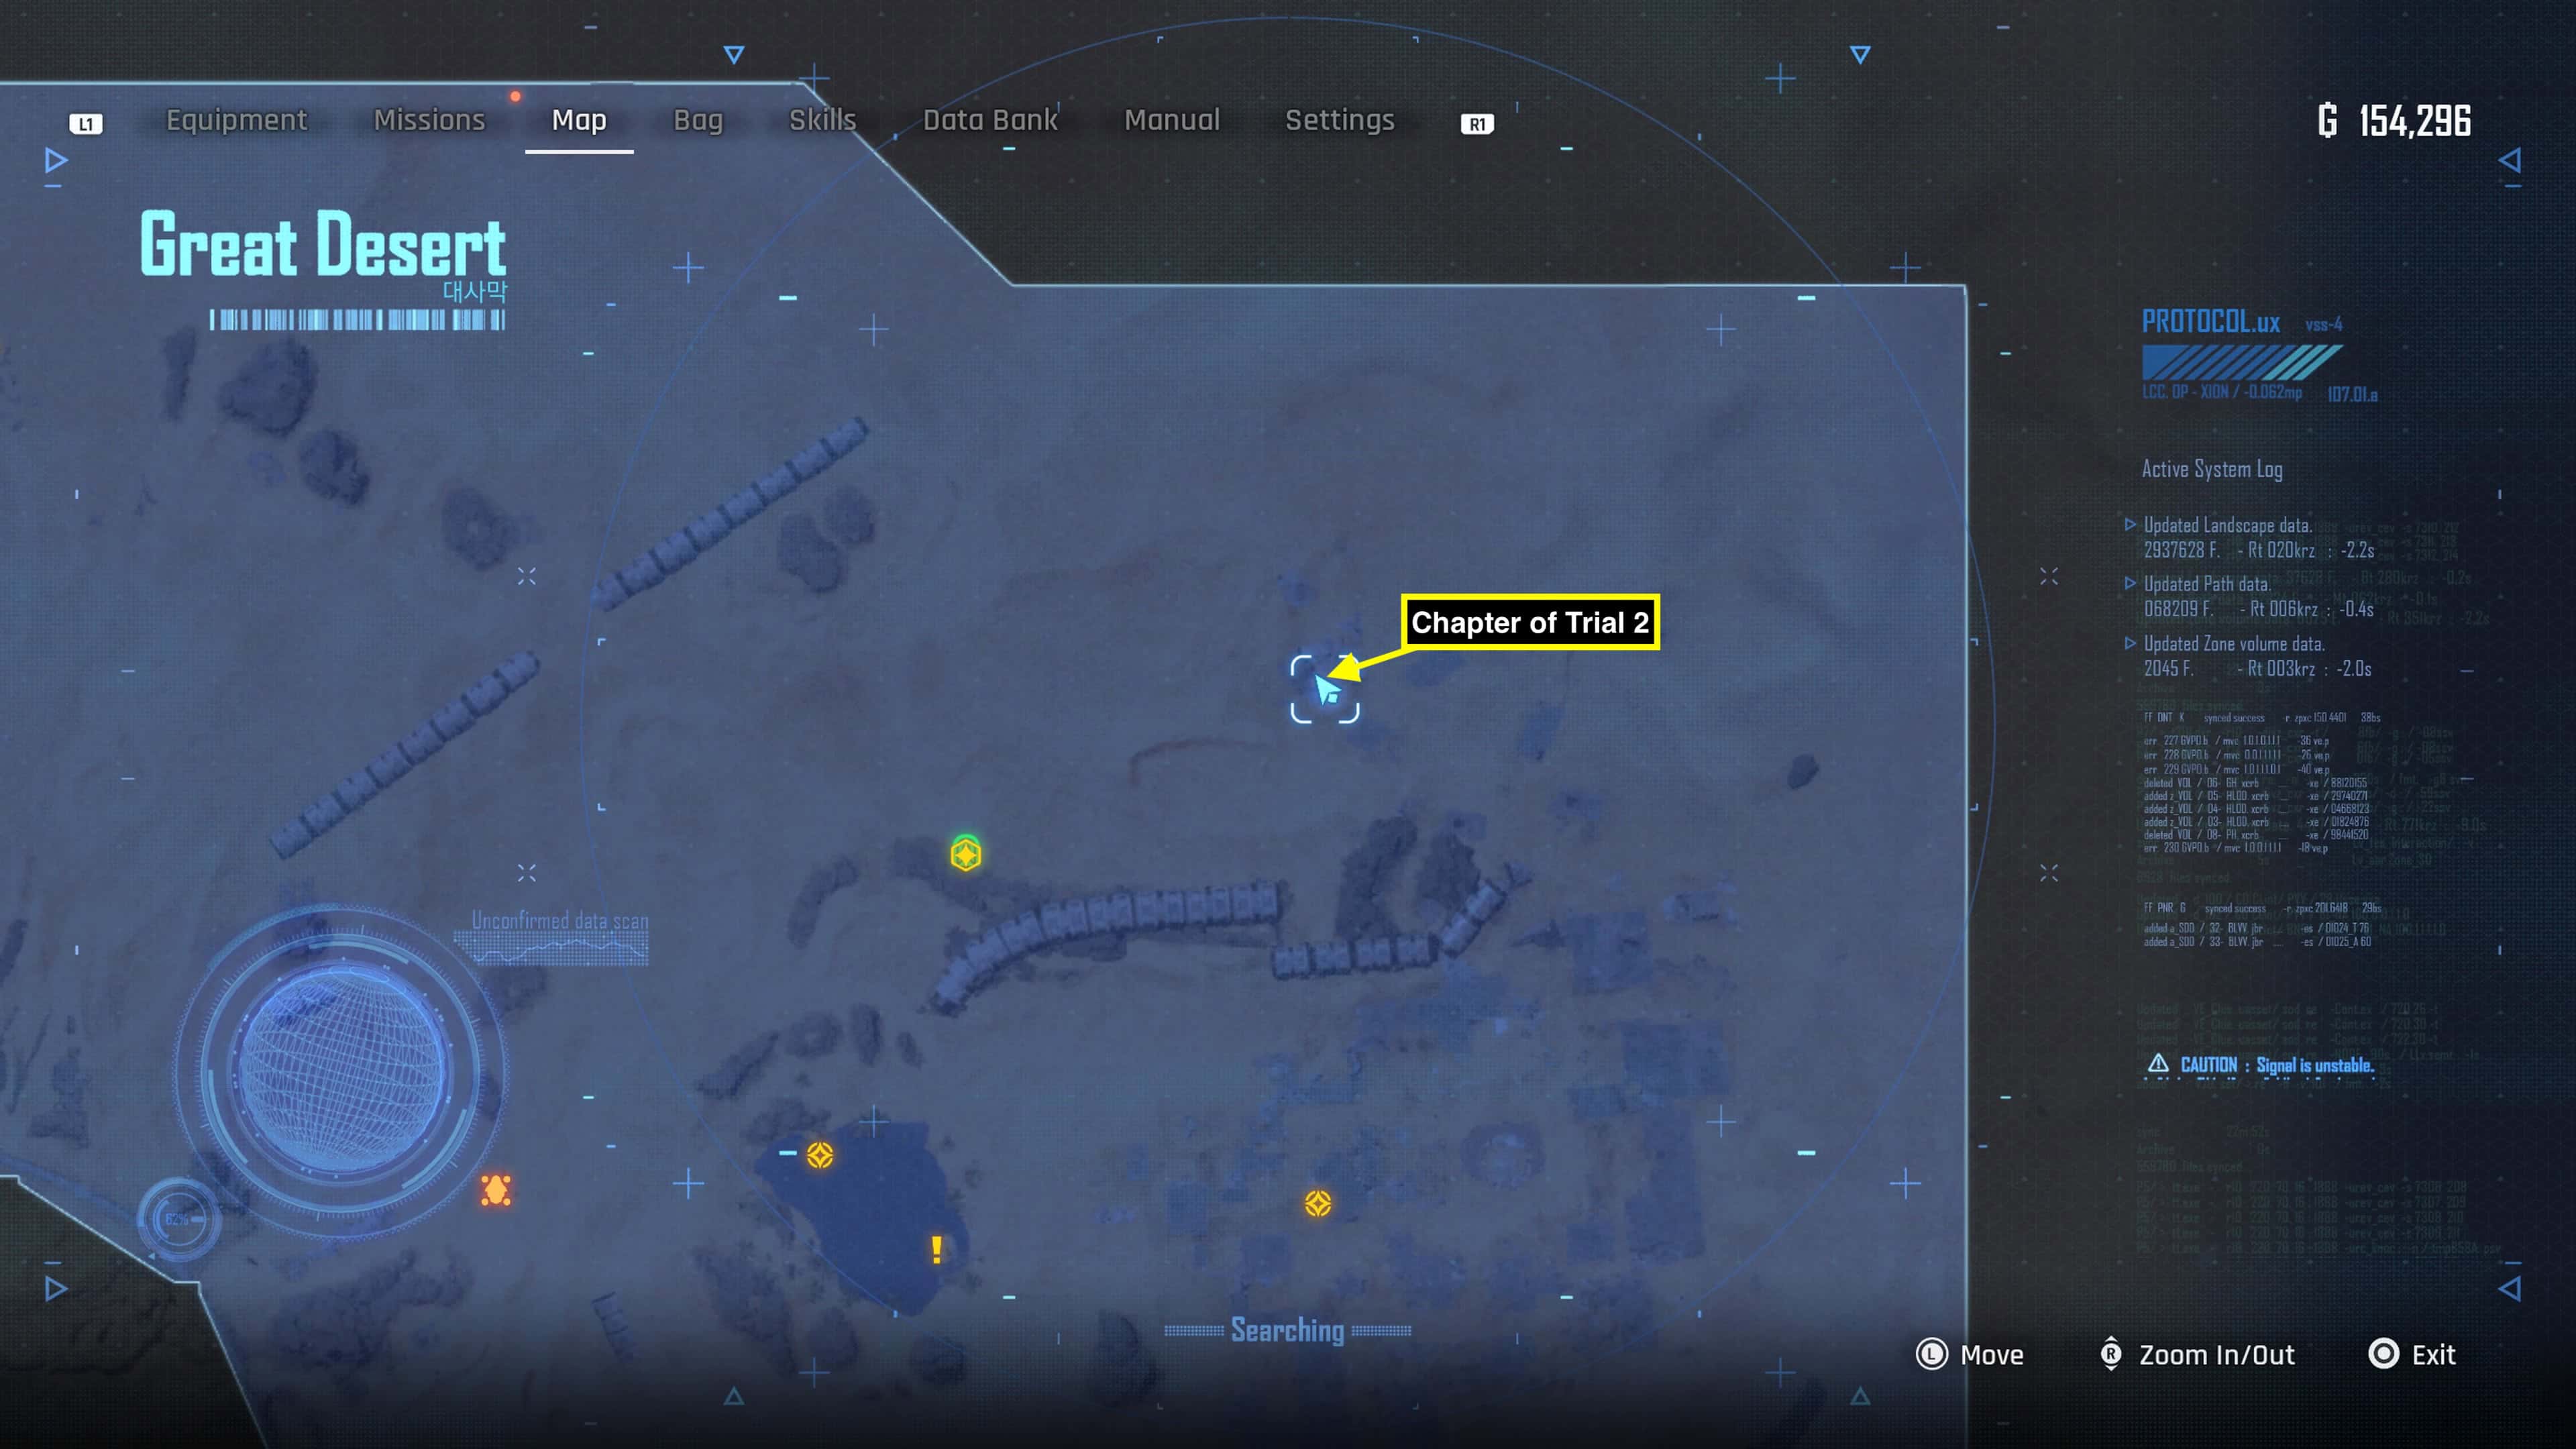 Stellar Blade prayer shrine locations - in-game map showing the great desert